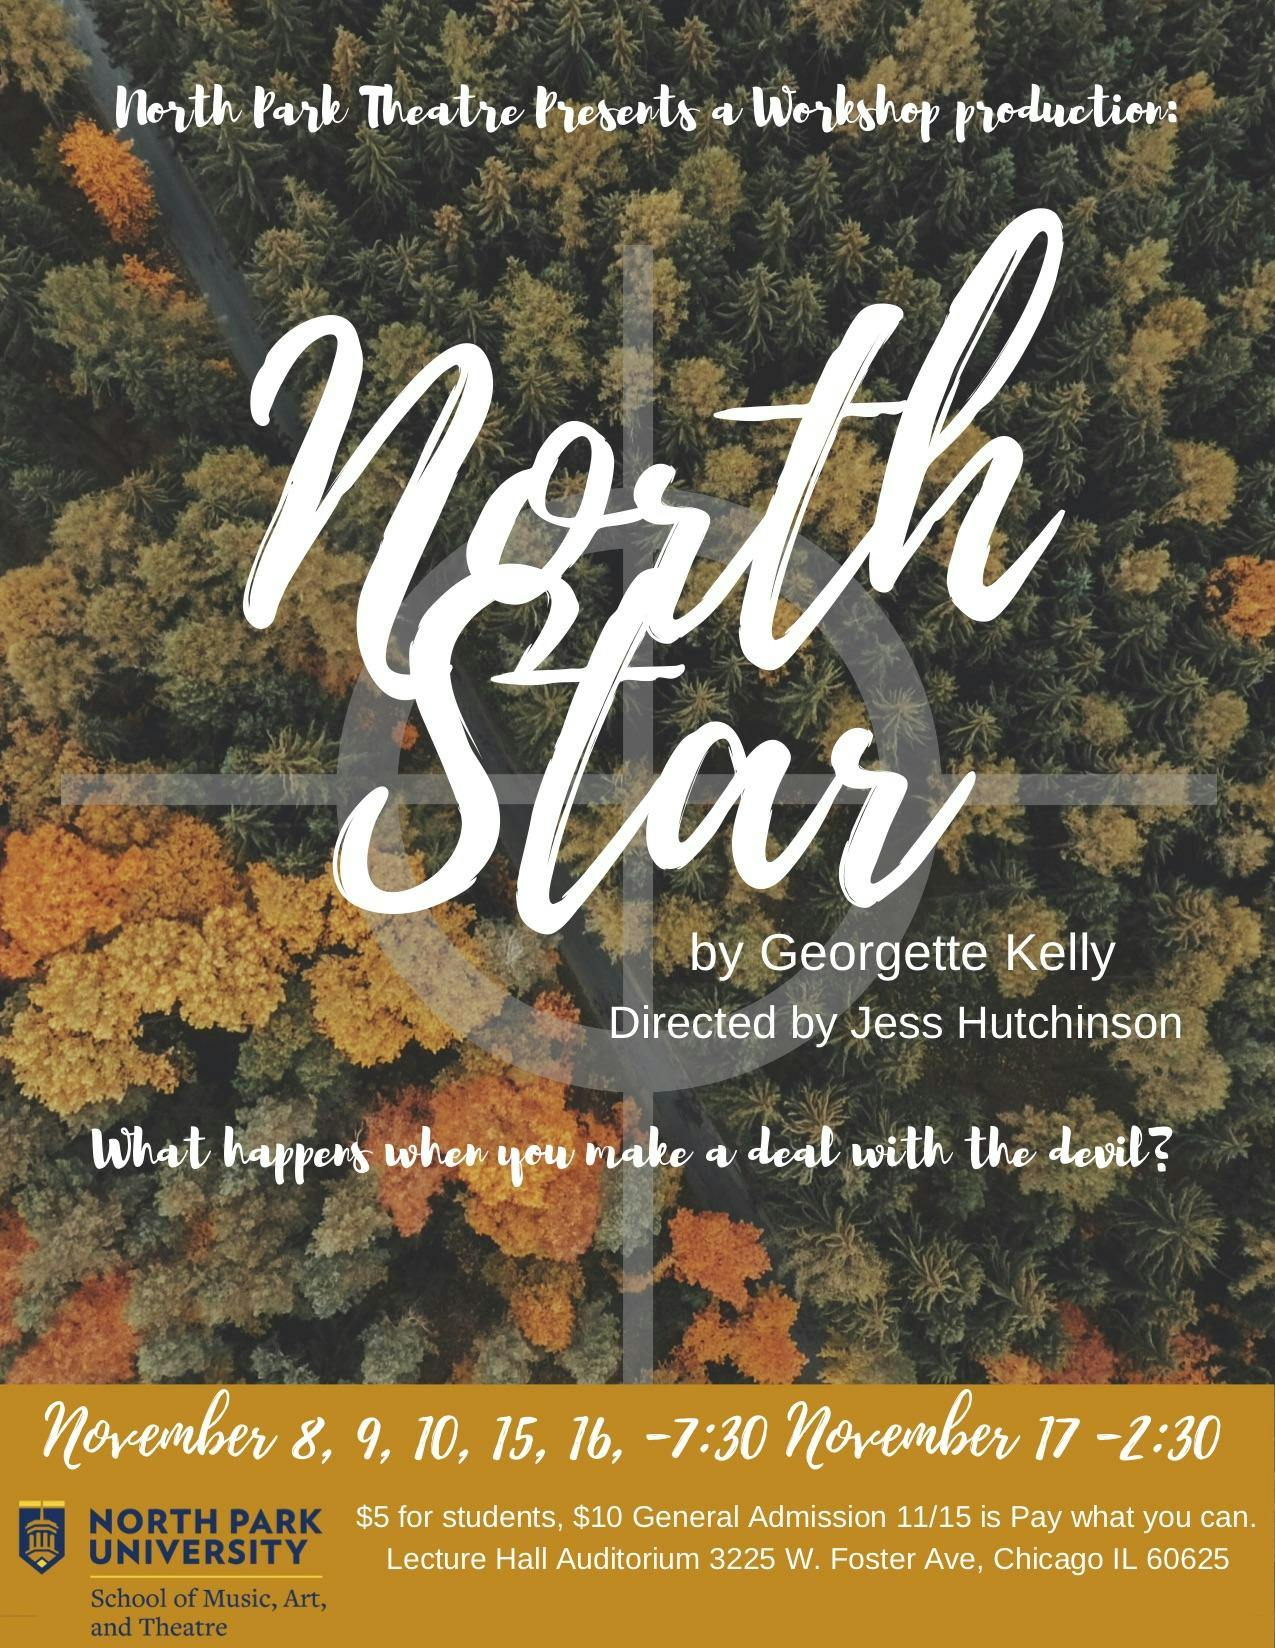 North Park Theatre presents North Star